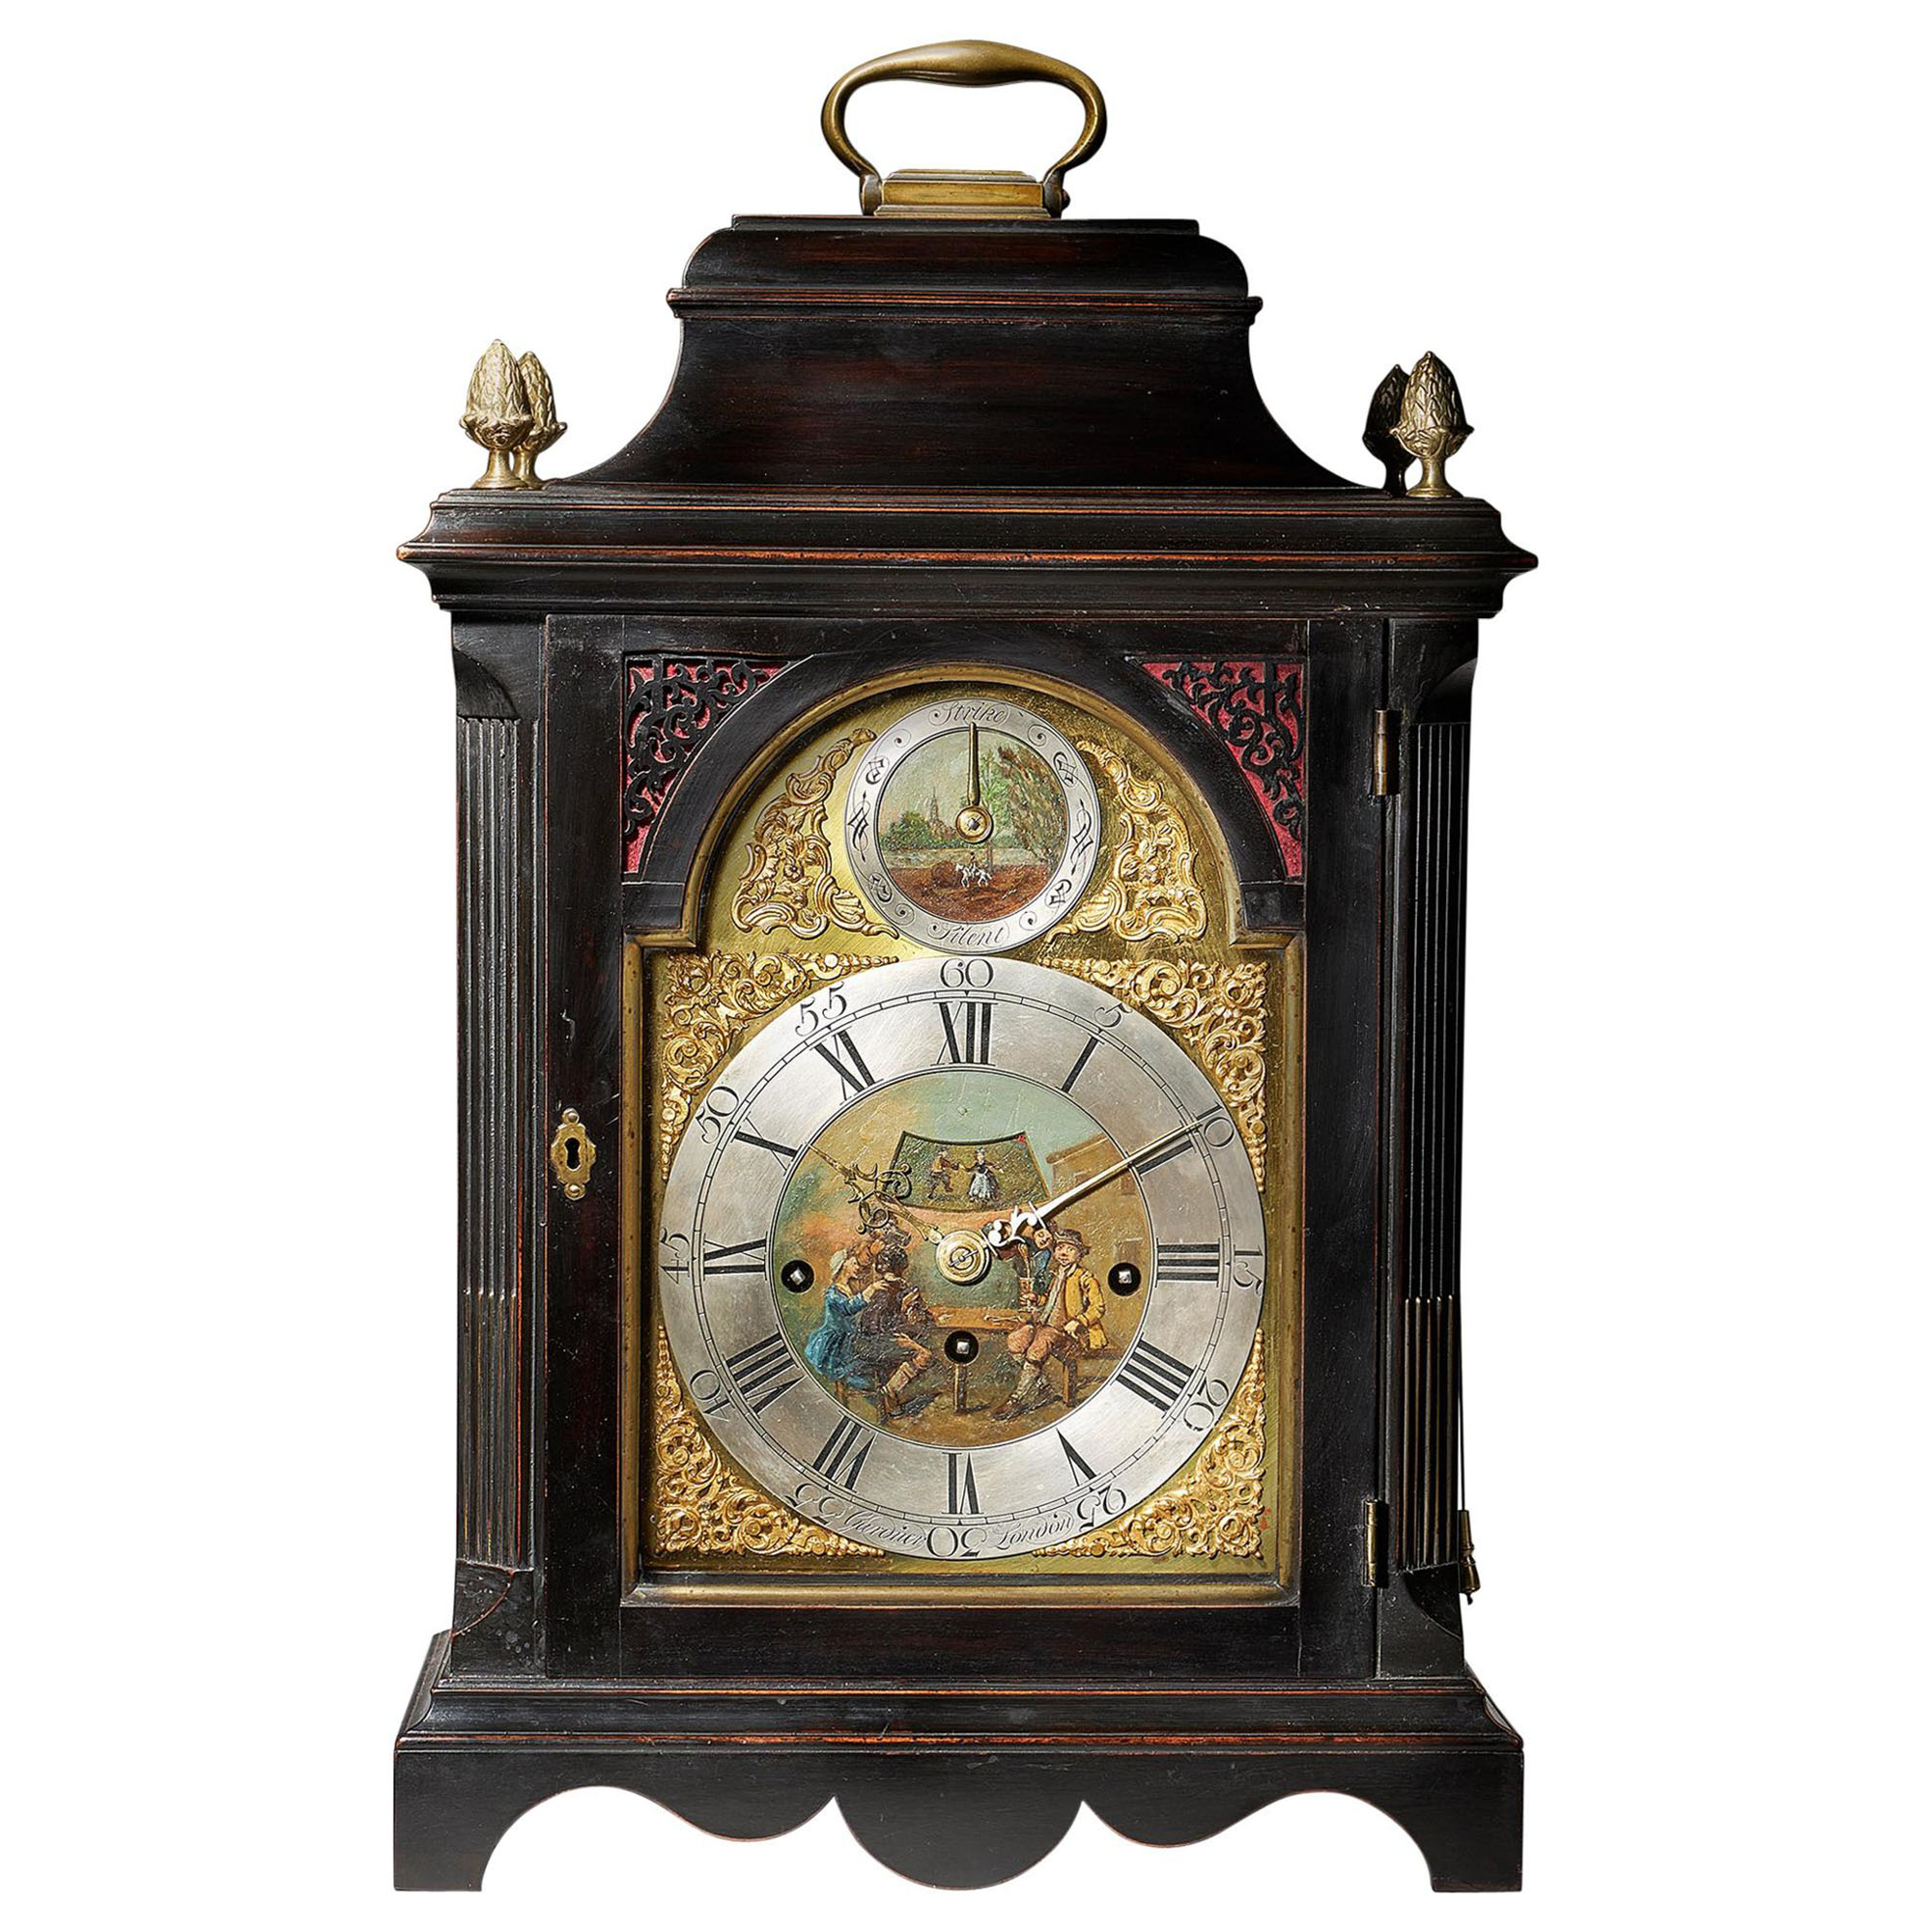 Extremely Rare George III 18th Century Quarter-Striking Bracket Clock 1